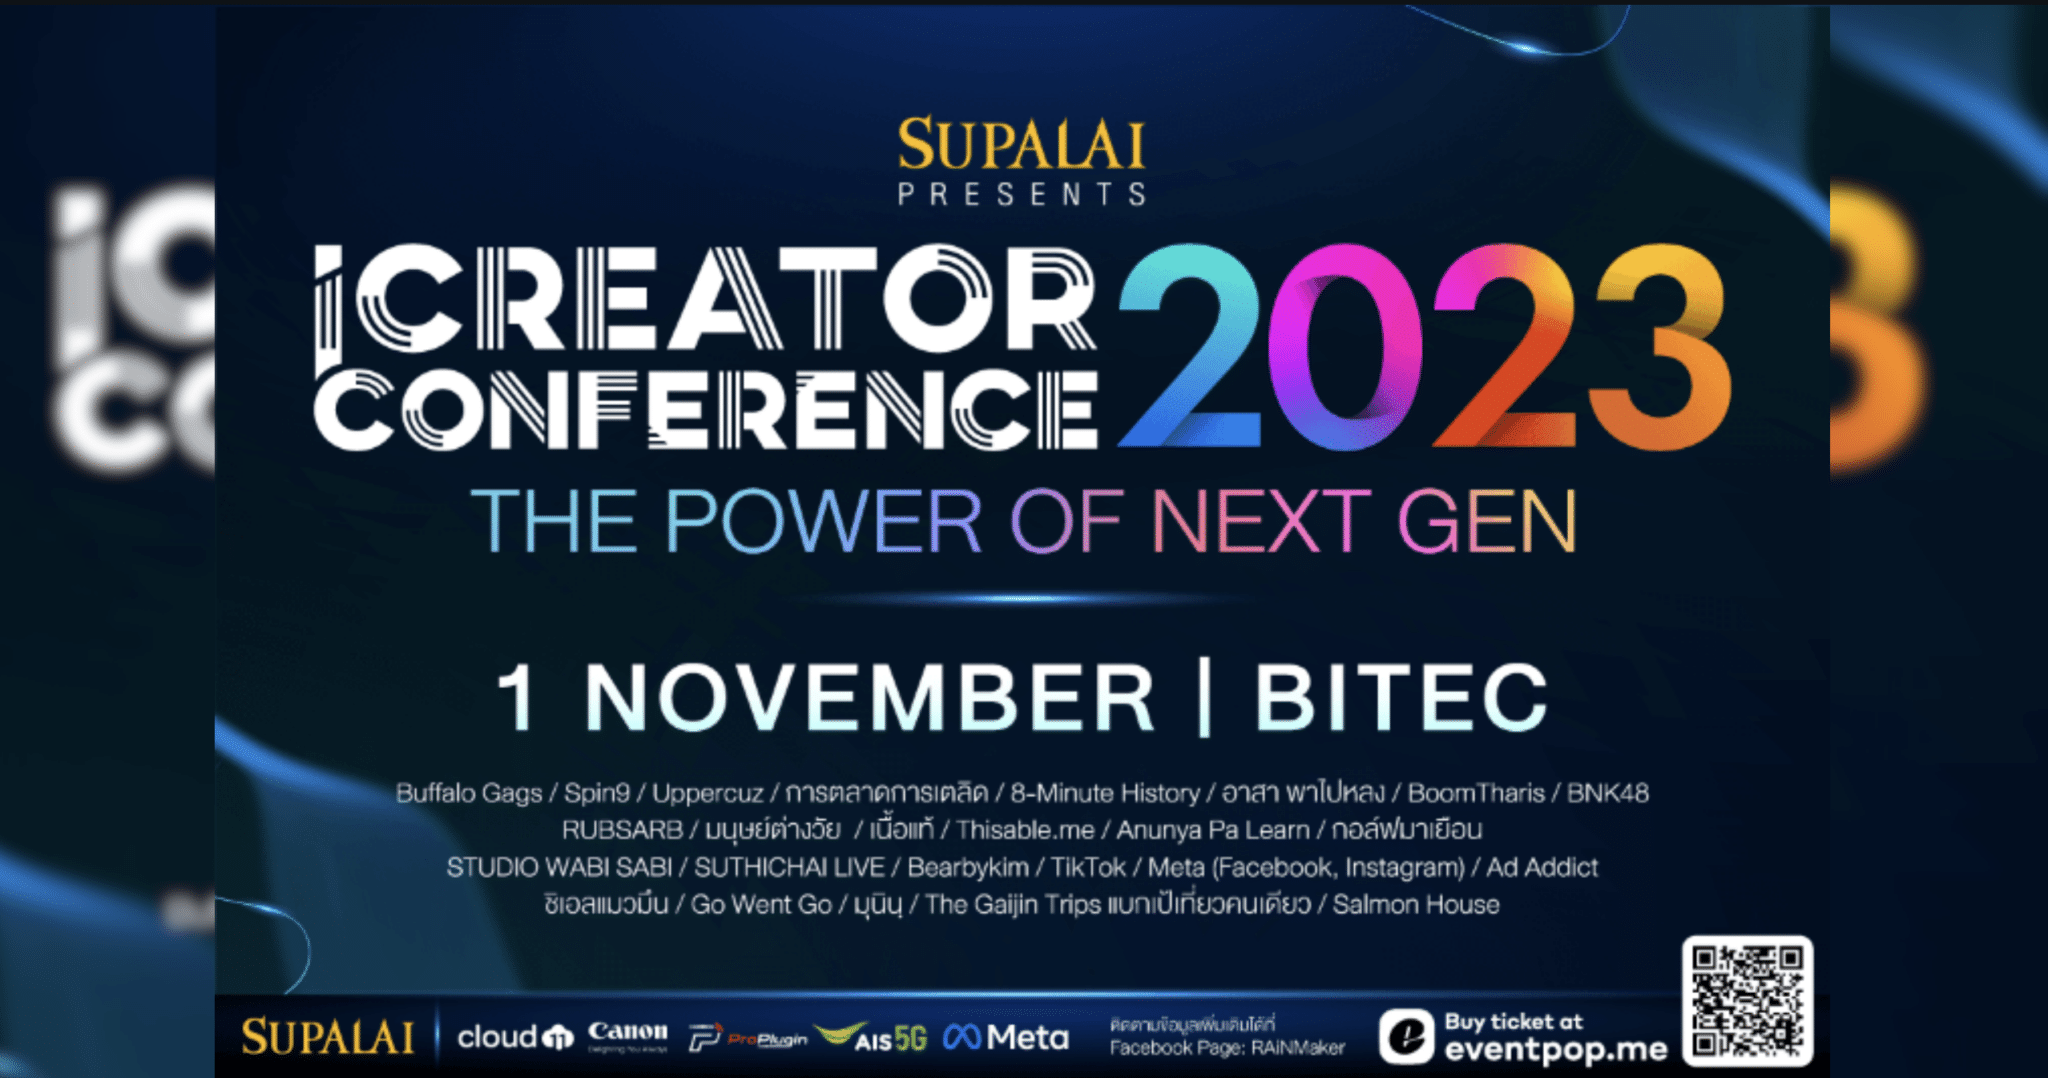 iCreator Conference 2023 Presented by SUPALAI   มหกรรมรวมคอนเทนต์ครีเอเตอร์ครั้งใหญ่ที่สุดในไทย  